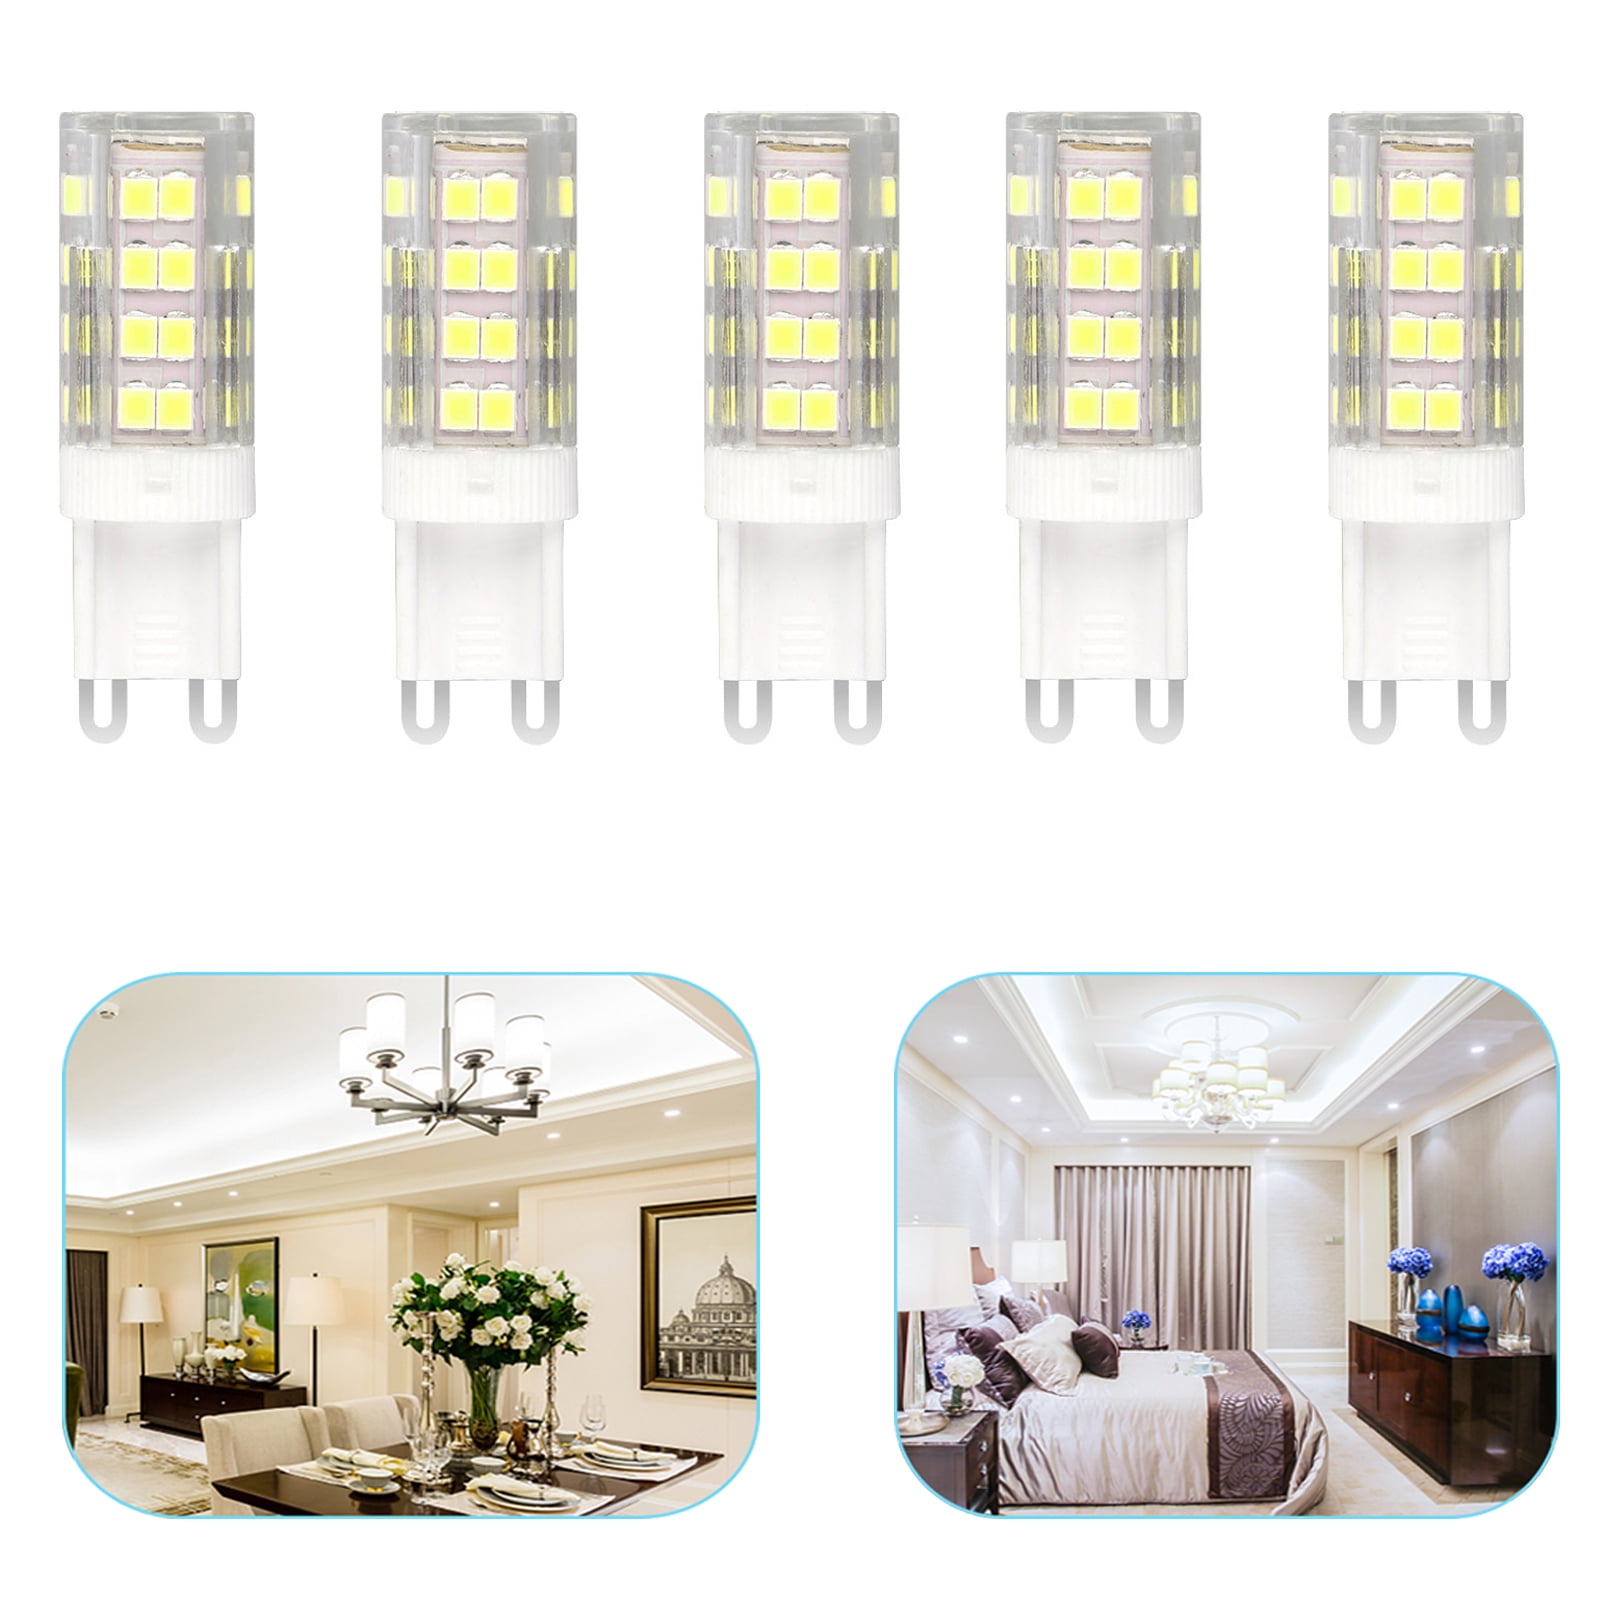 G9 led Light Bulbs G9 led Bulbs AC110V 120V 5W = 50W Halogen Bulb Equivalent 